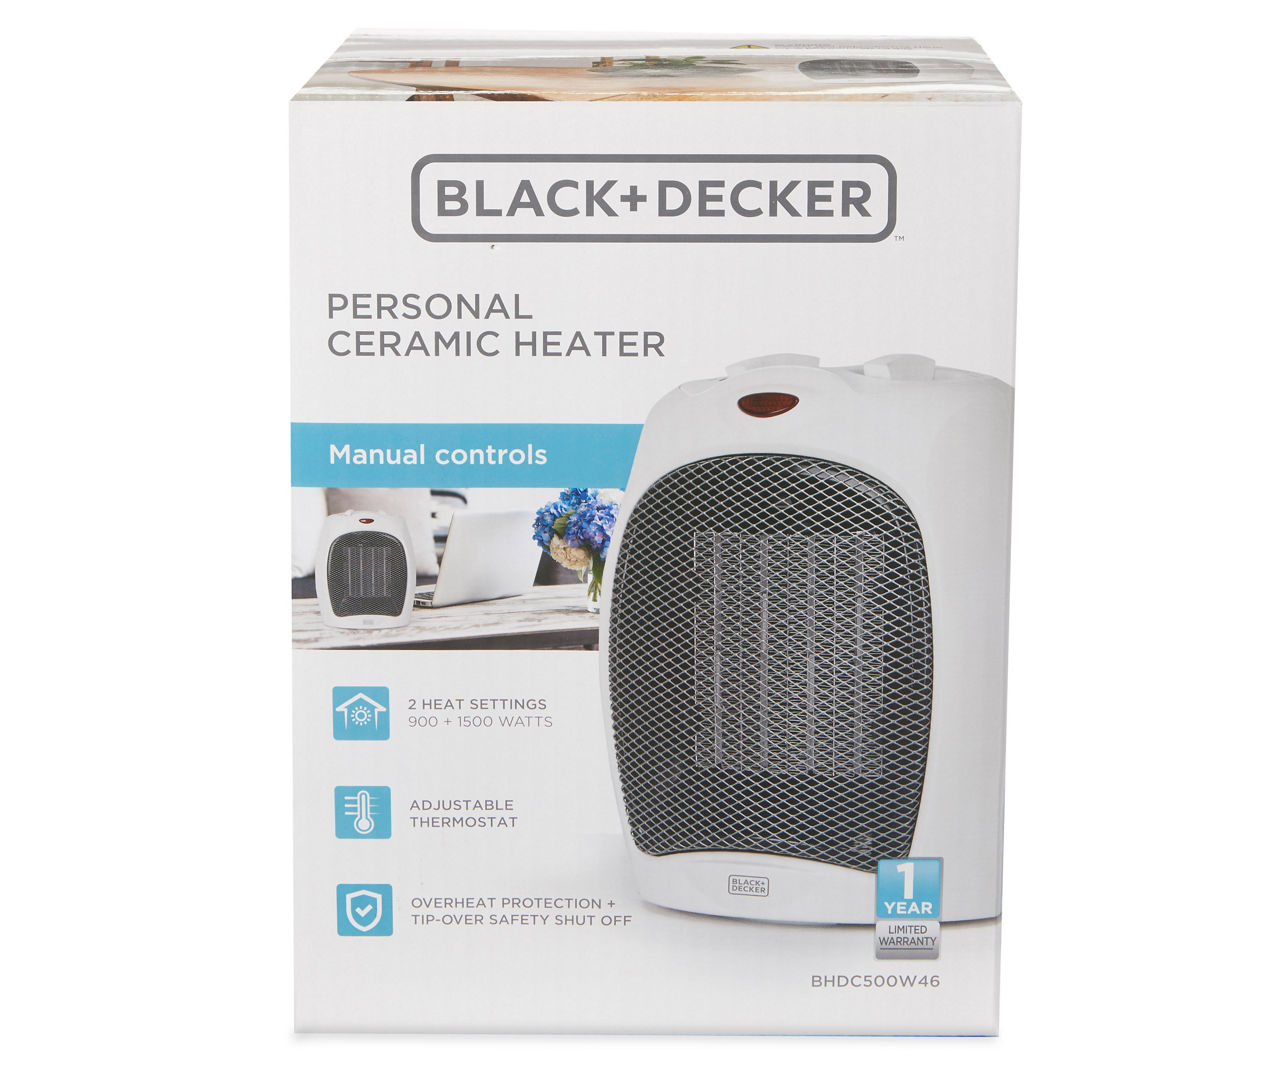 Black+decker Personal Ceramic Heater- Black